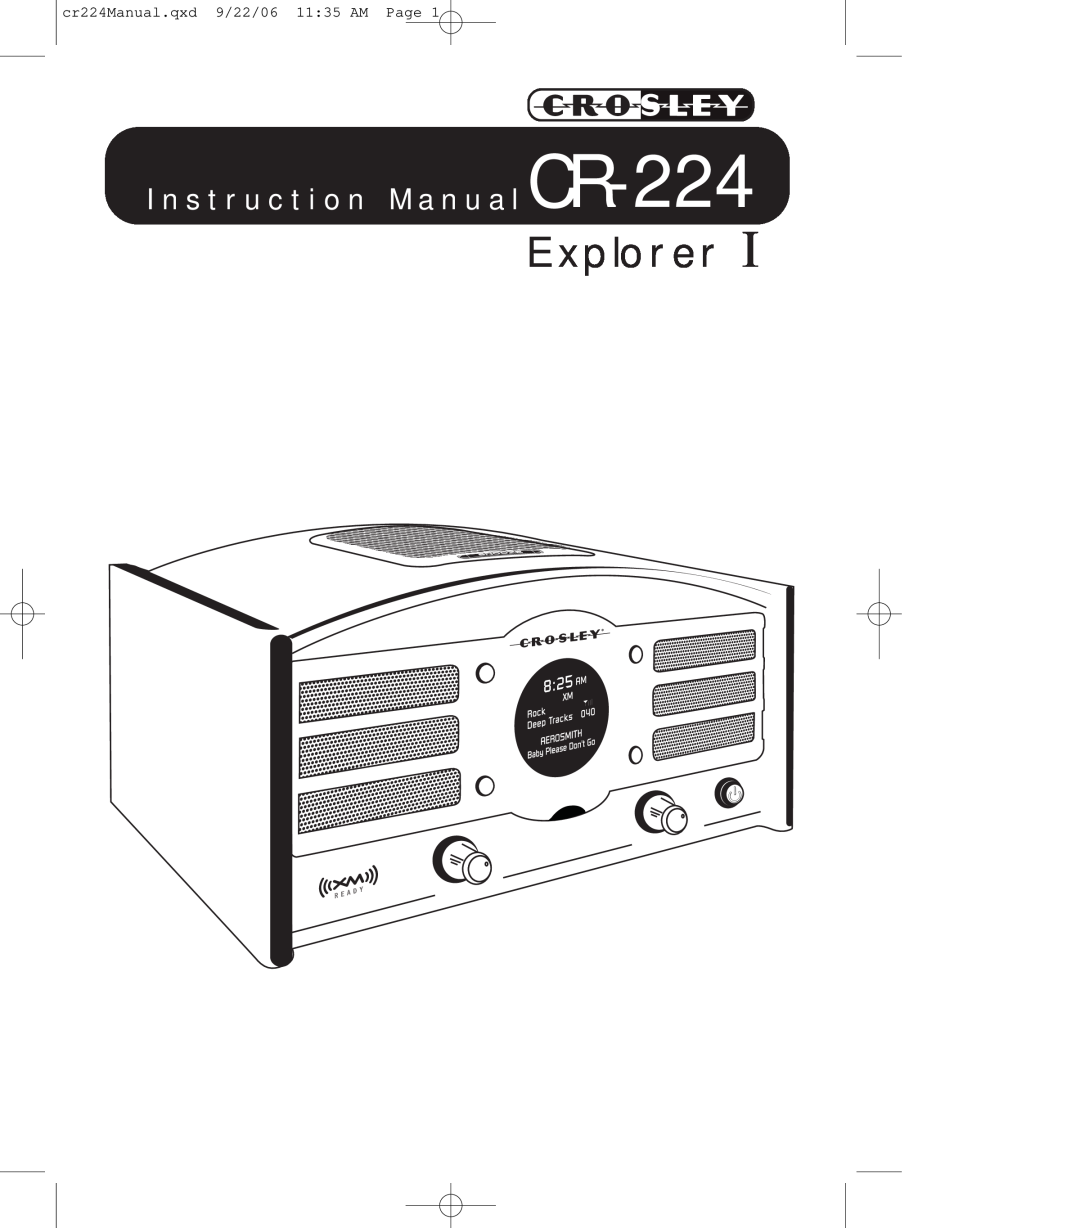 Crosley Radio cr-224, crosley explorer instruction manual I n s t r u c t i o n M a n u a l CR-224, Explorer 